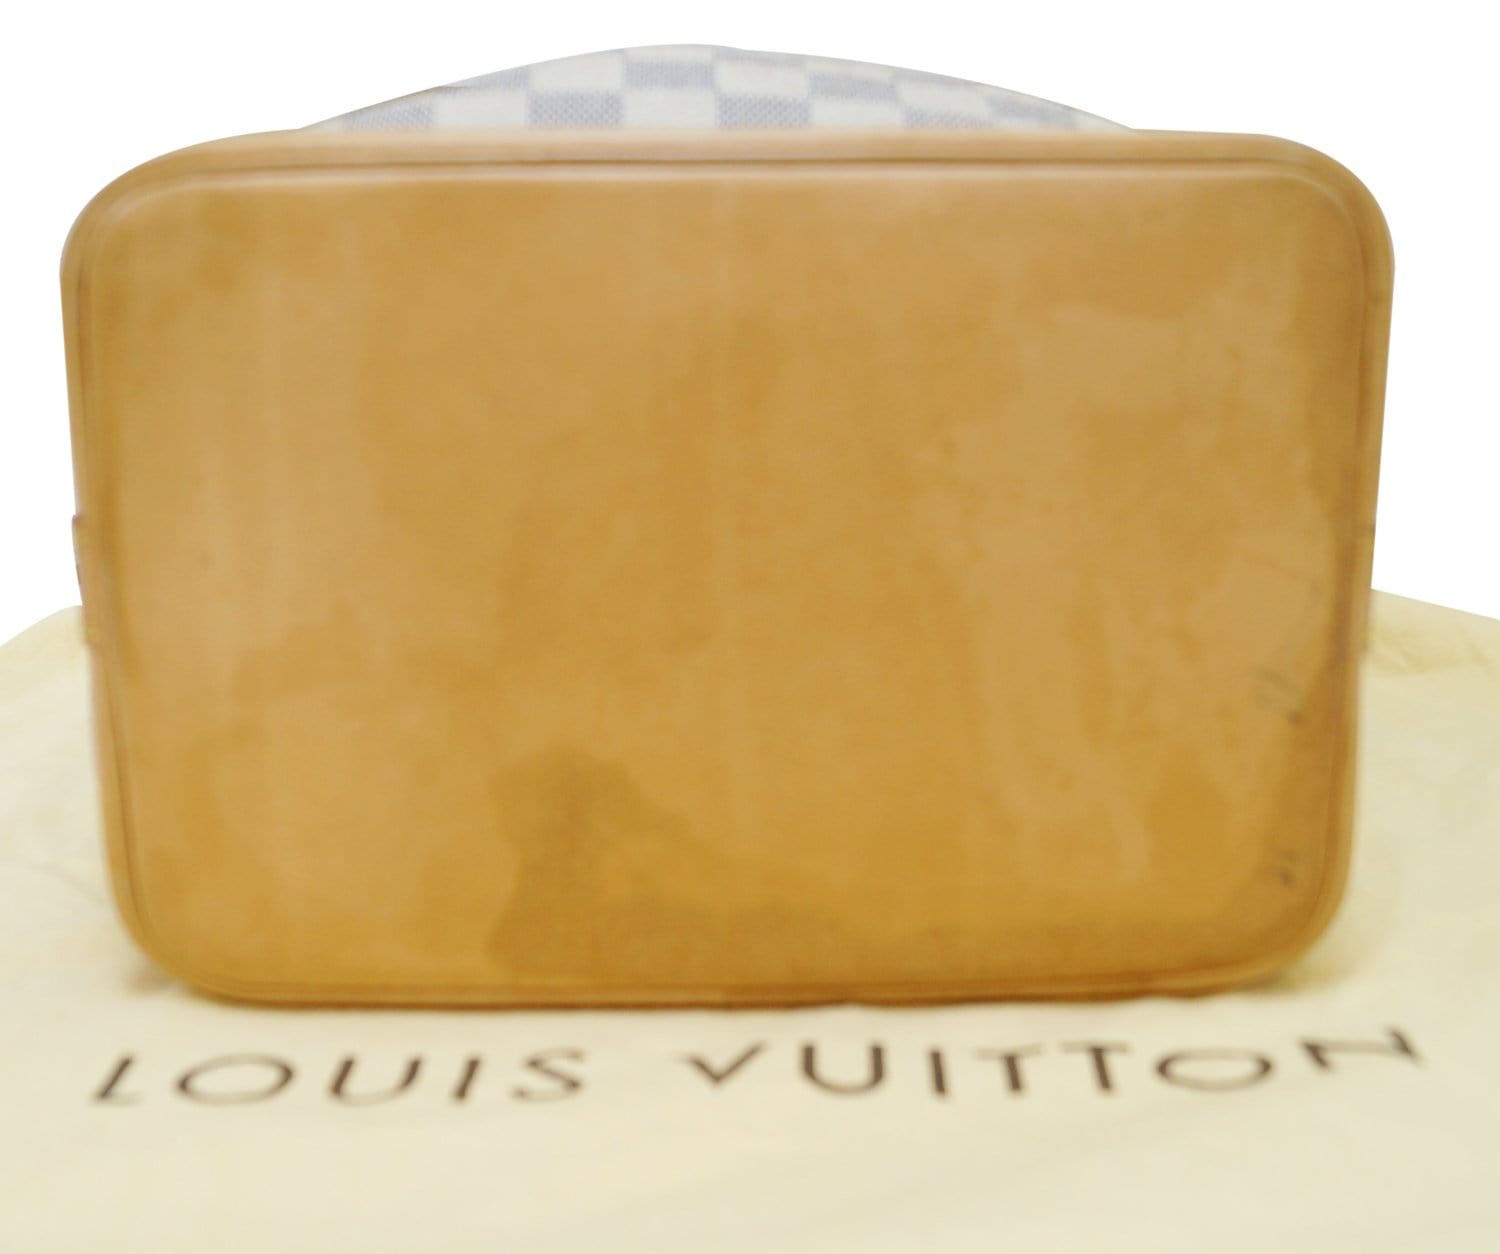 Louis Vuitton Damier Azur Noe BB at Jill's Consignment